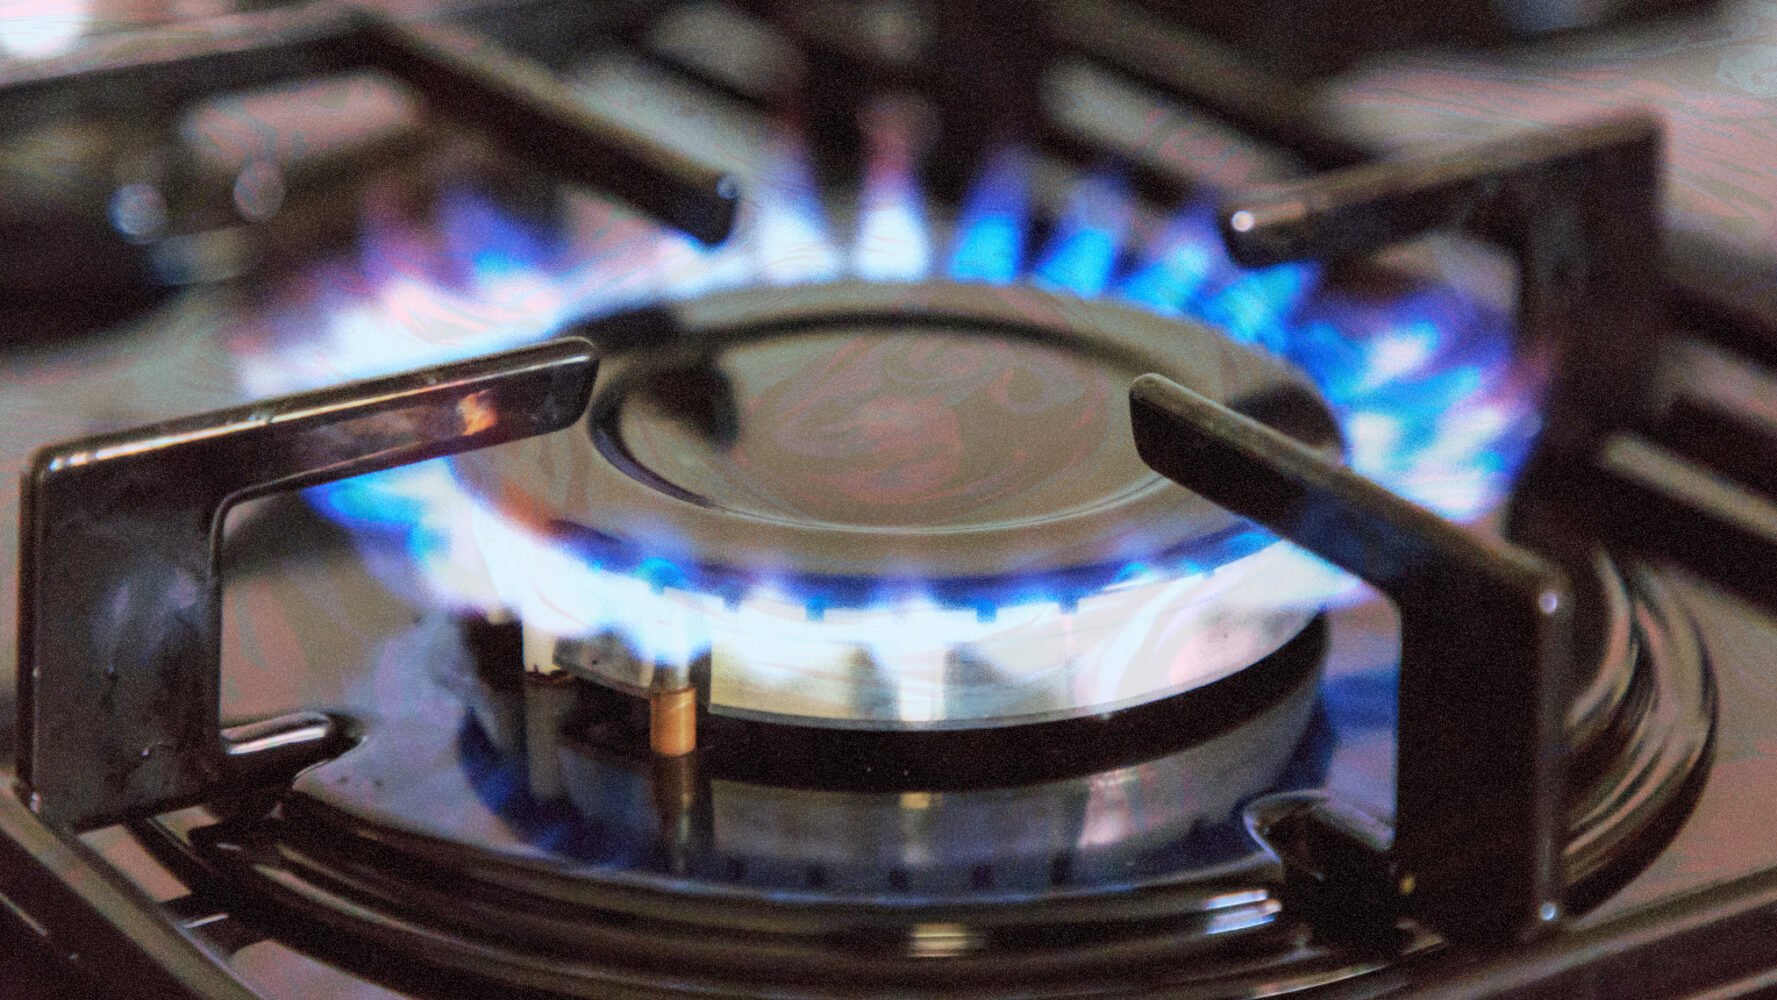 a brightly lit stove burner